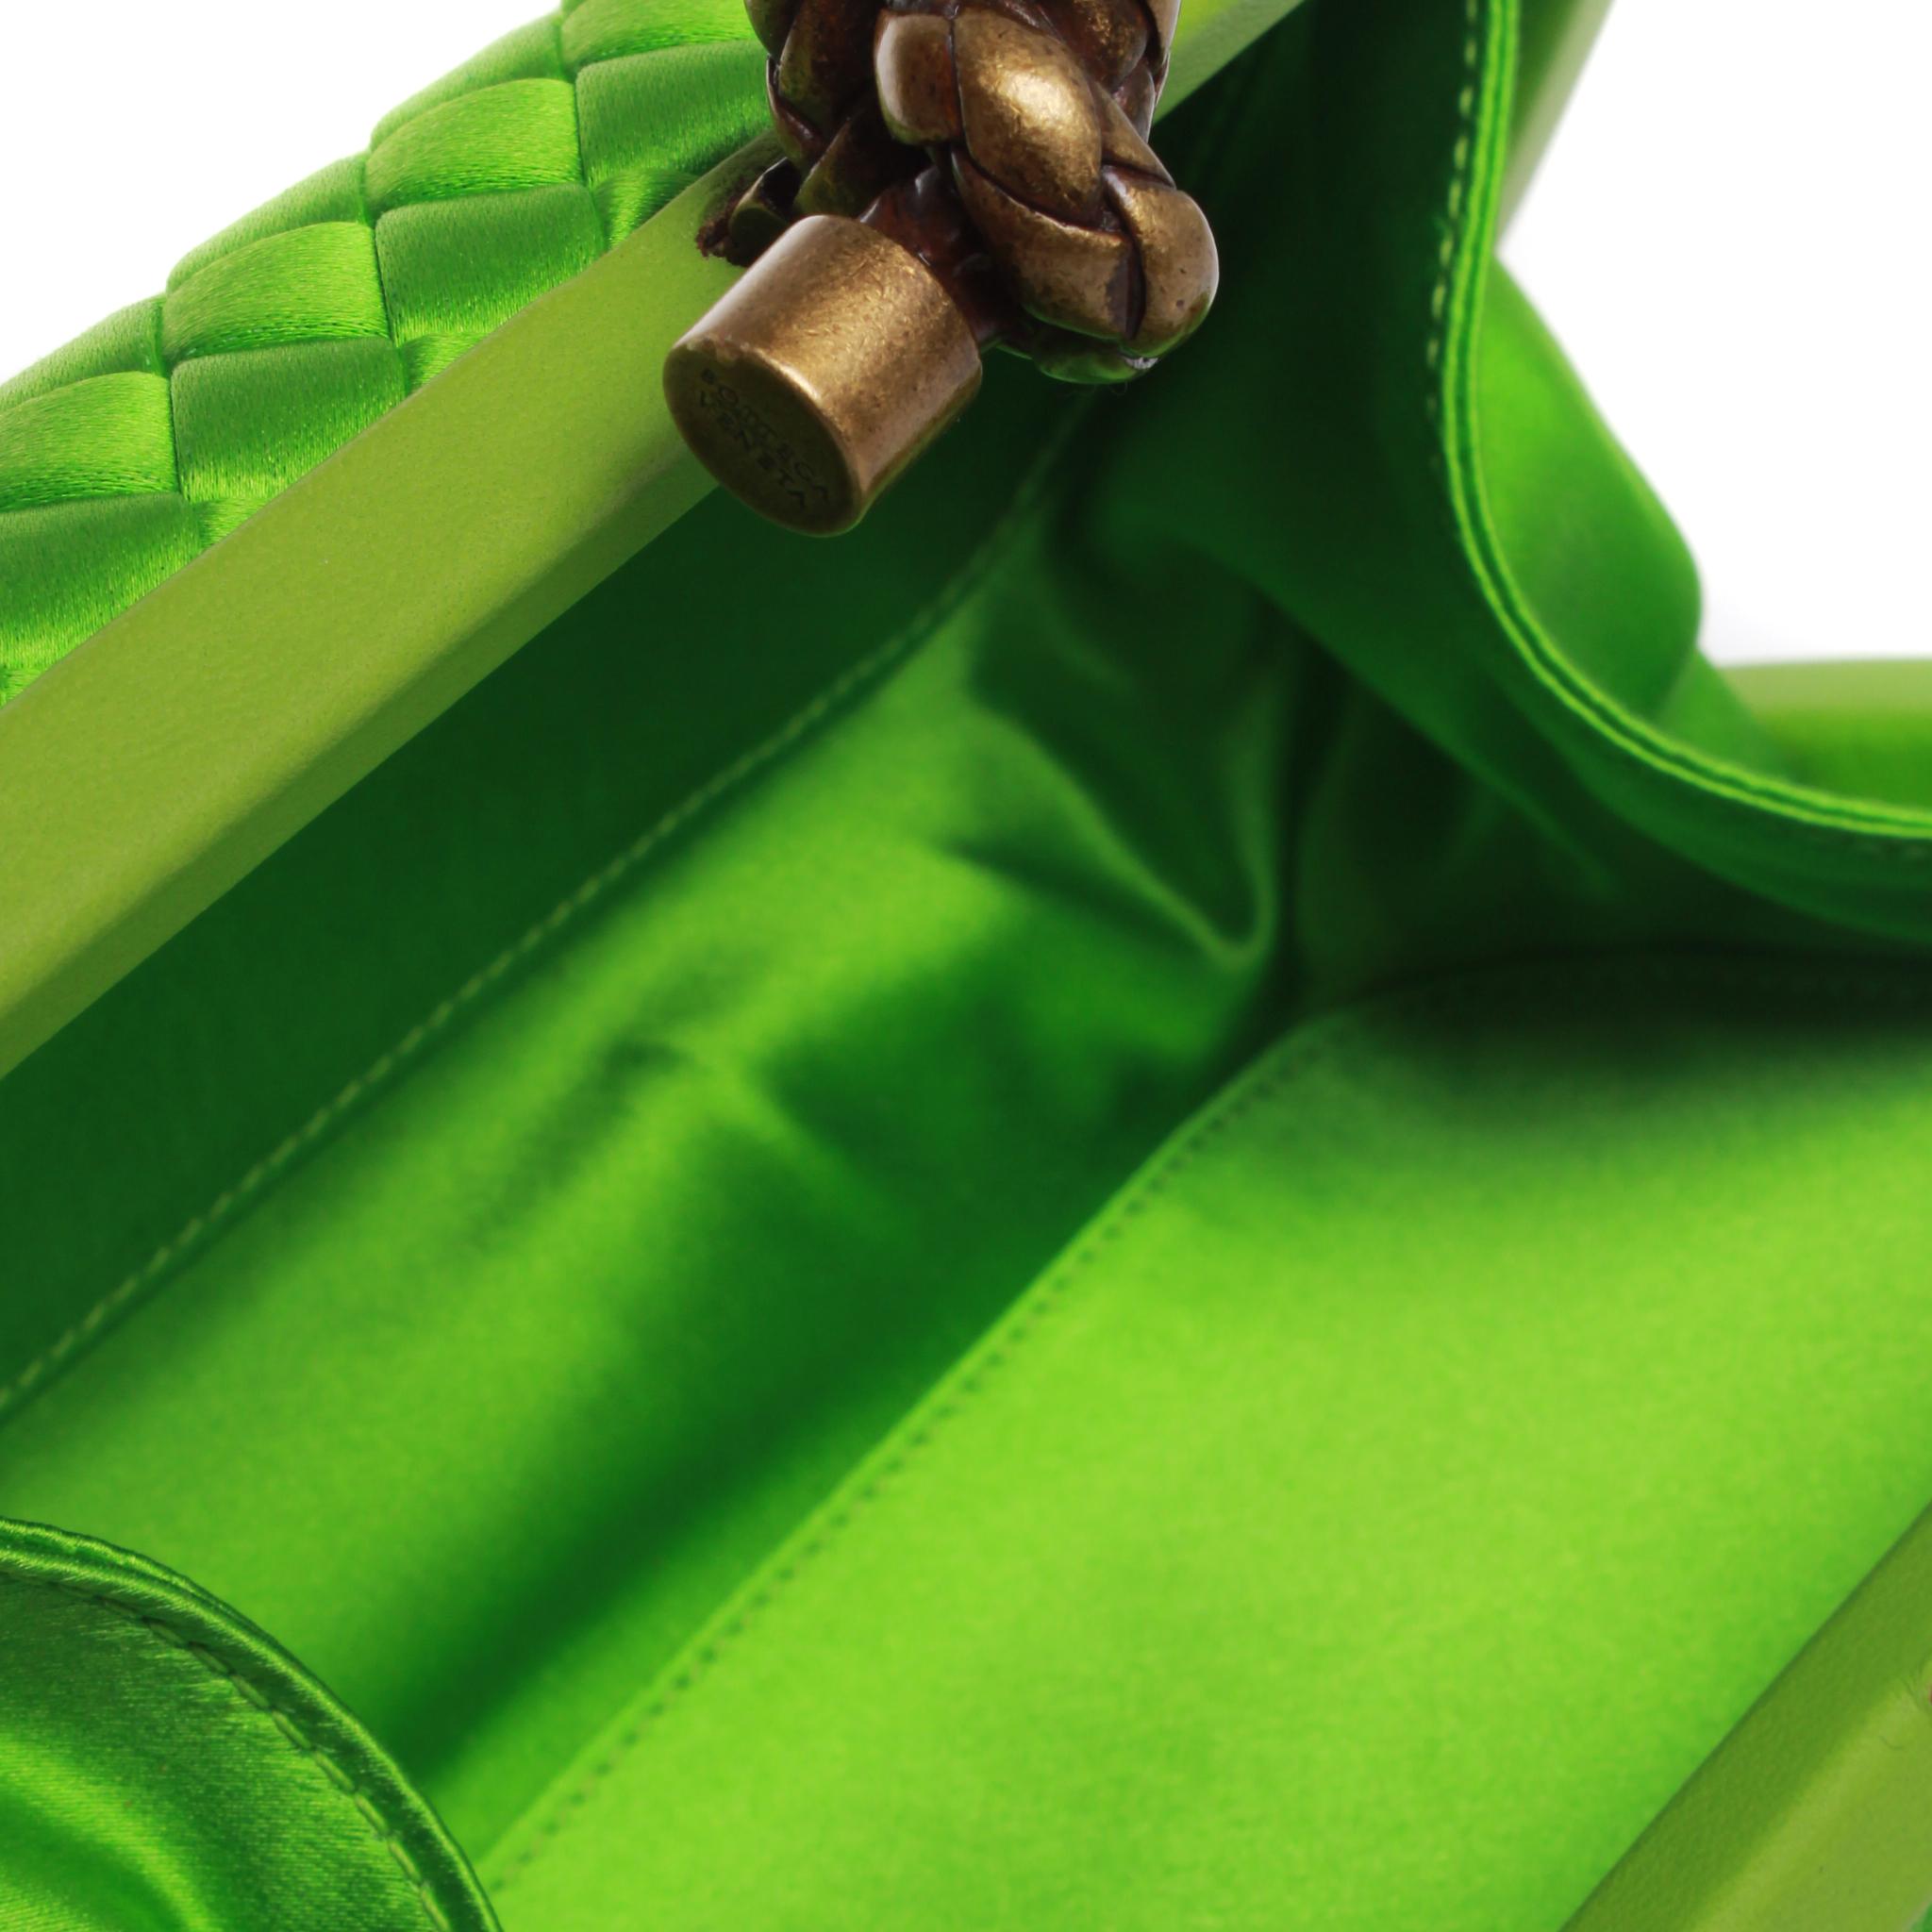 Green Bottega Veneta knot clutch in apple green